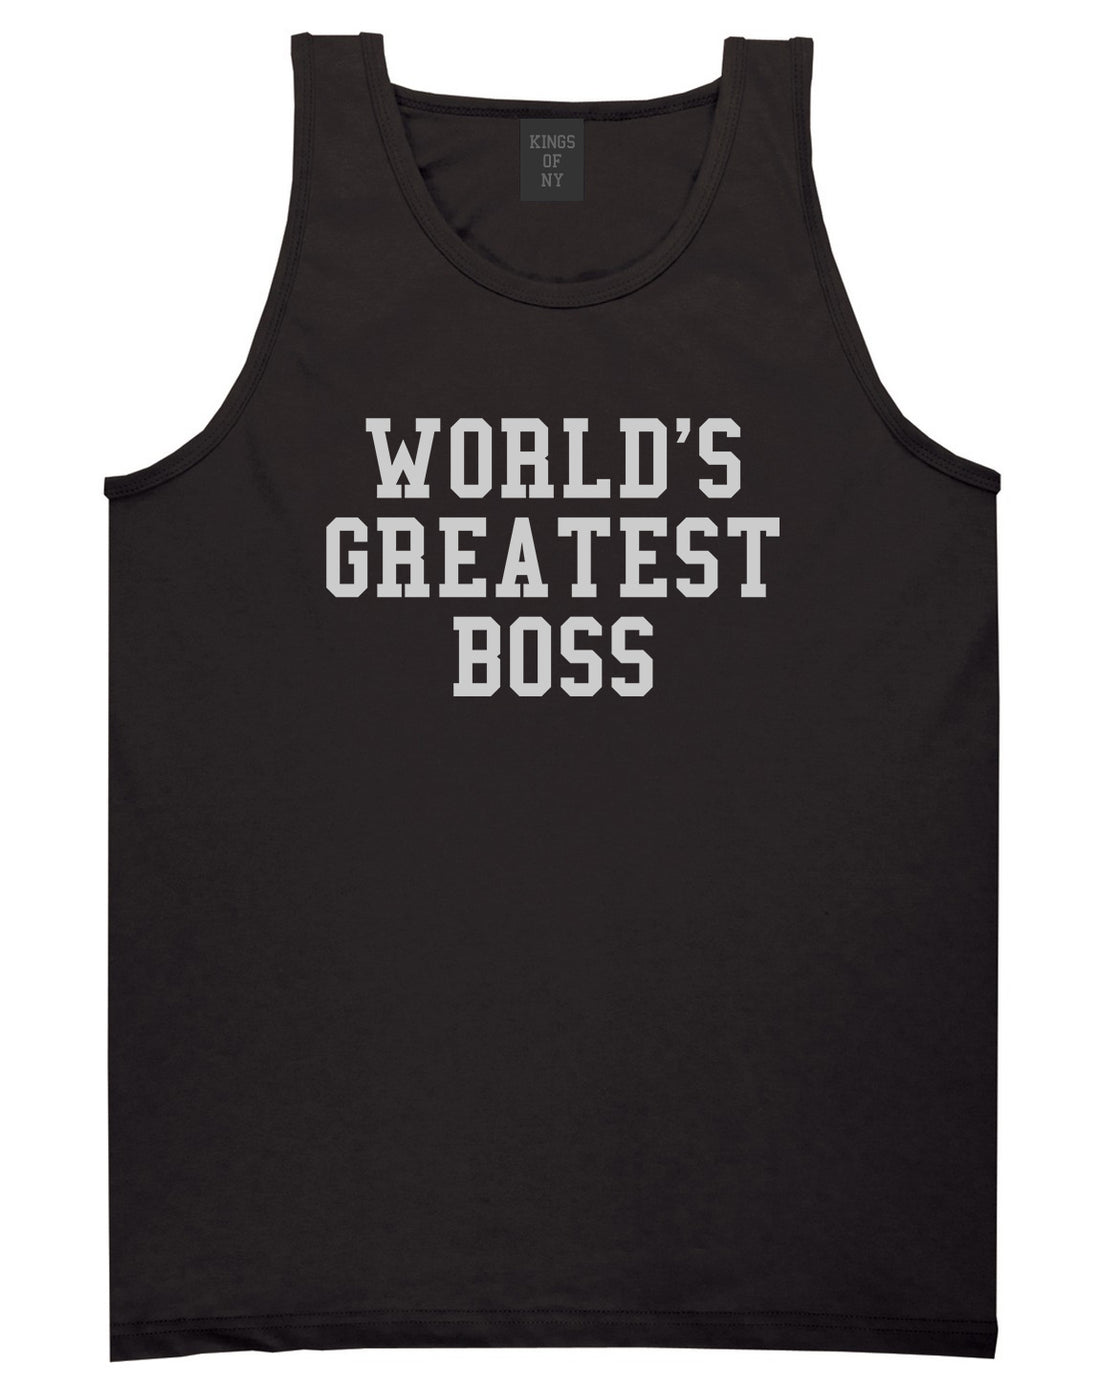 Worlds Greatest Boss Funny Christmas Mens Tank Top T-Shirt Black